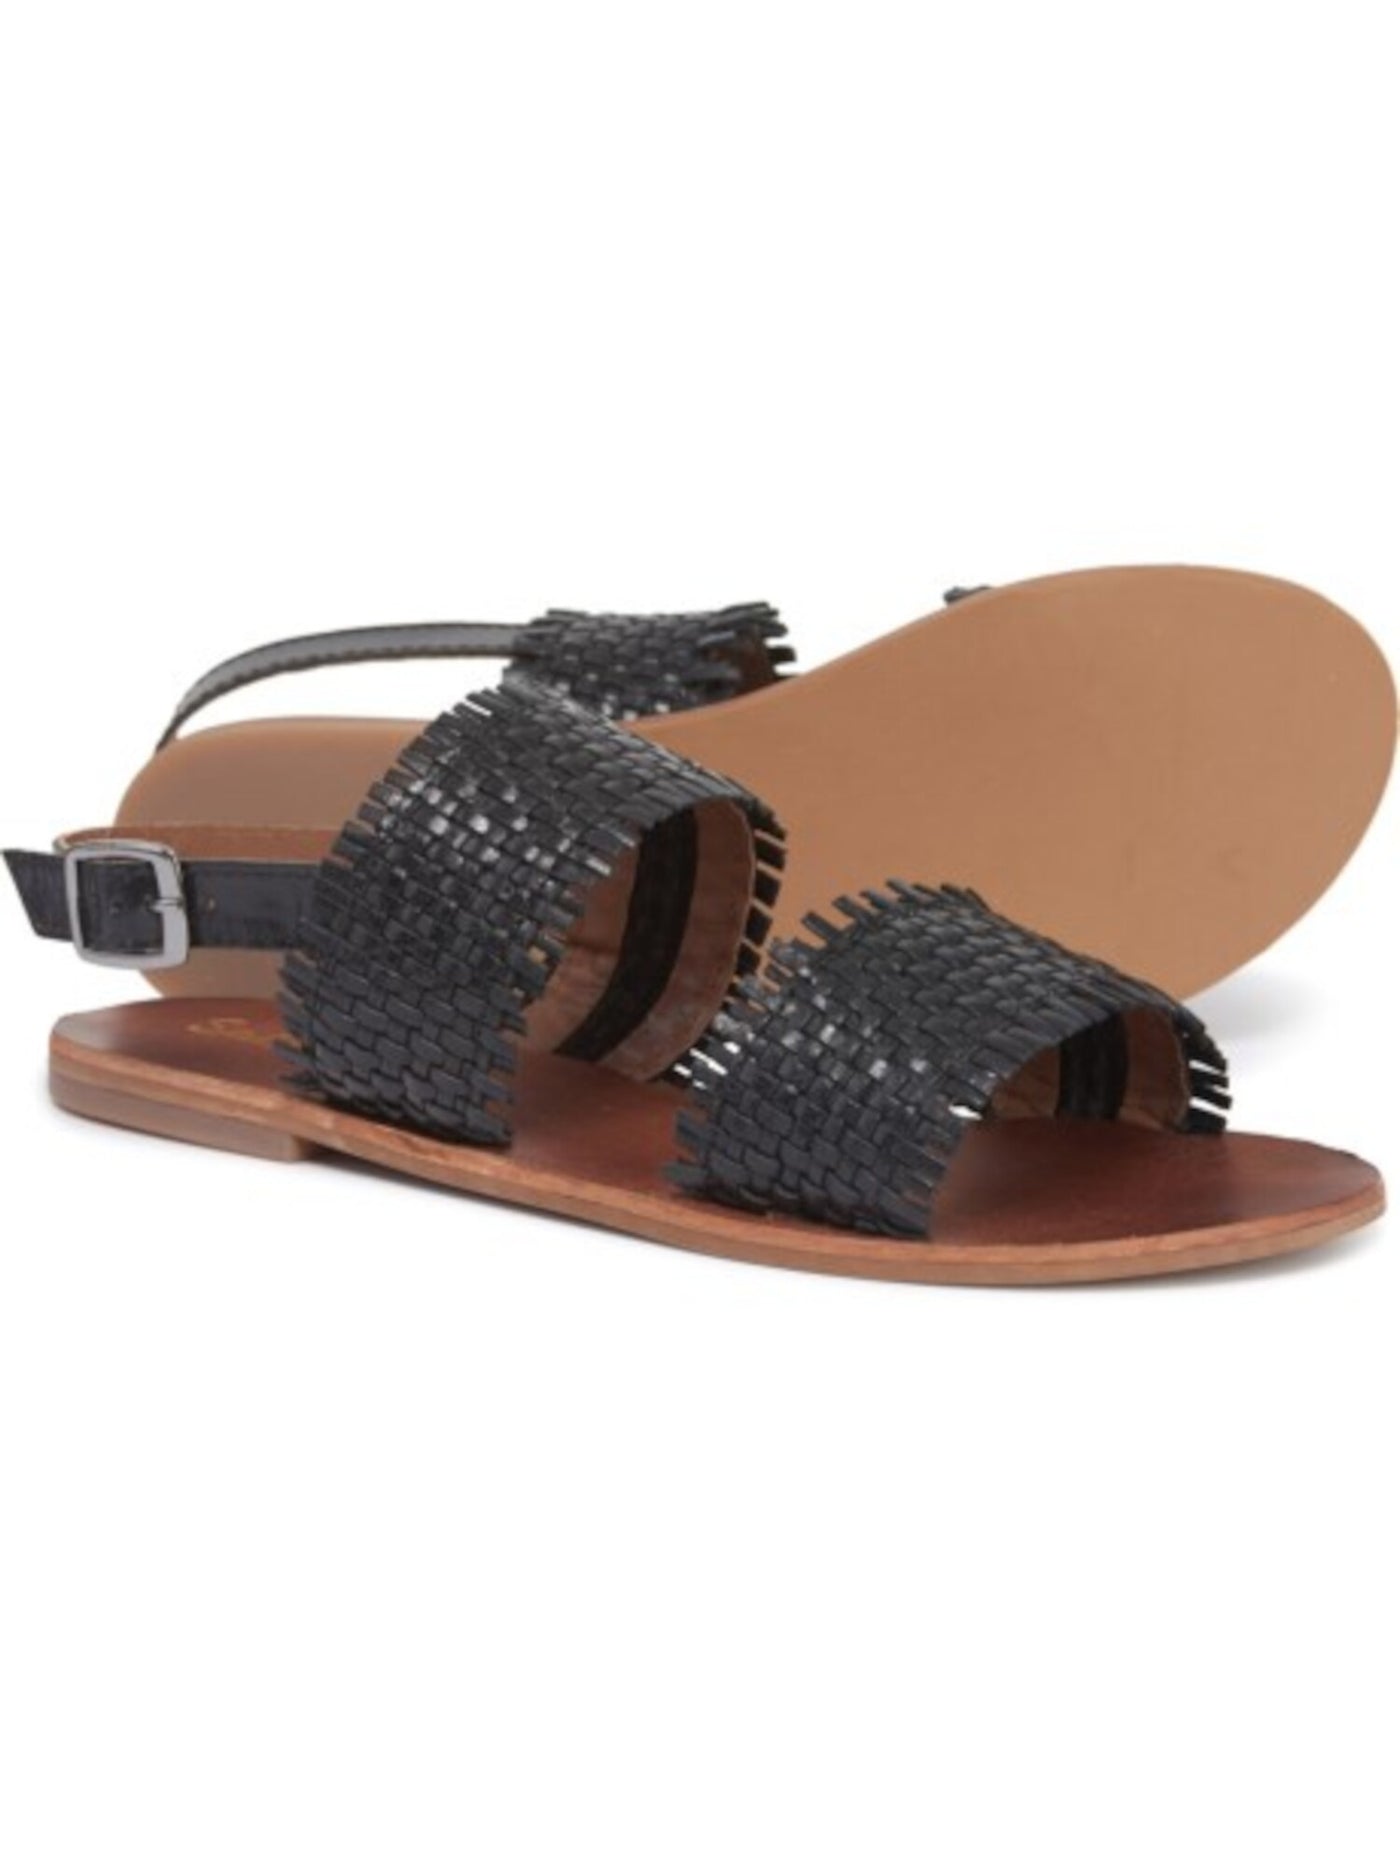 SPLENDID Womens Black Woven Adjustable Strap Thomas Round Toe Block Heel Buckle Leather Sandals Shoes 6.5